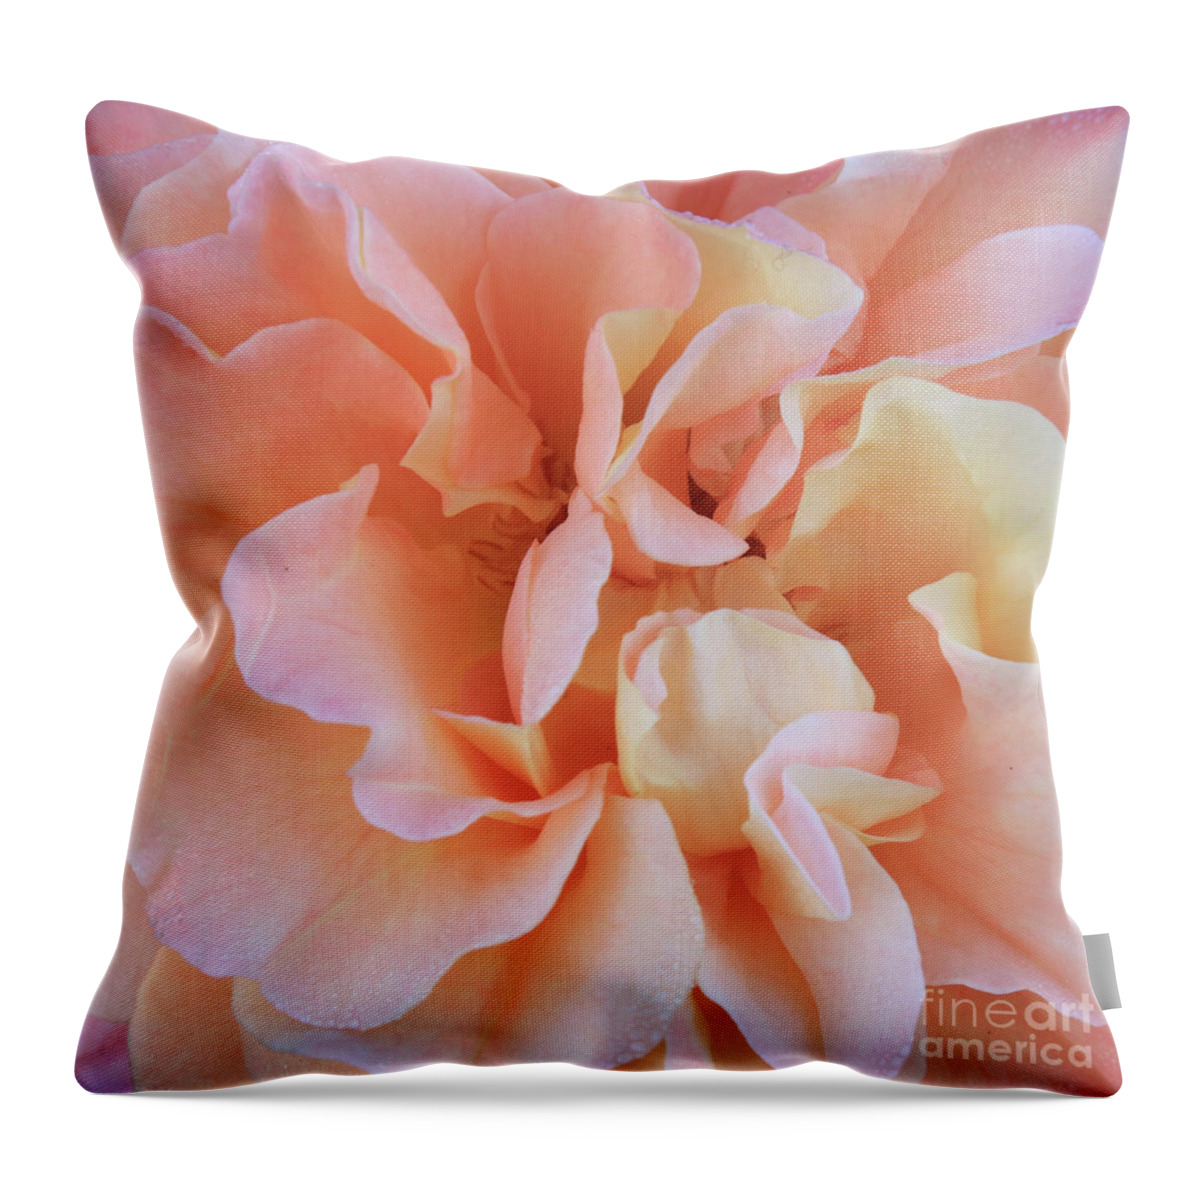 Rose Throw Pillow featuring the photograph Beautiful Rose Petals Macro by Carol Groenen